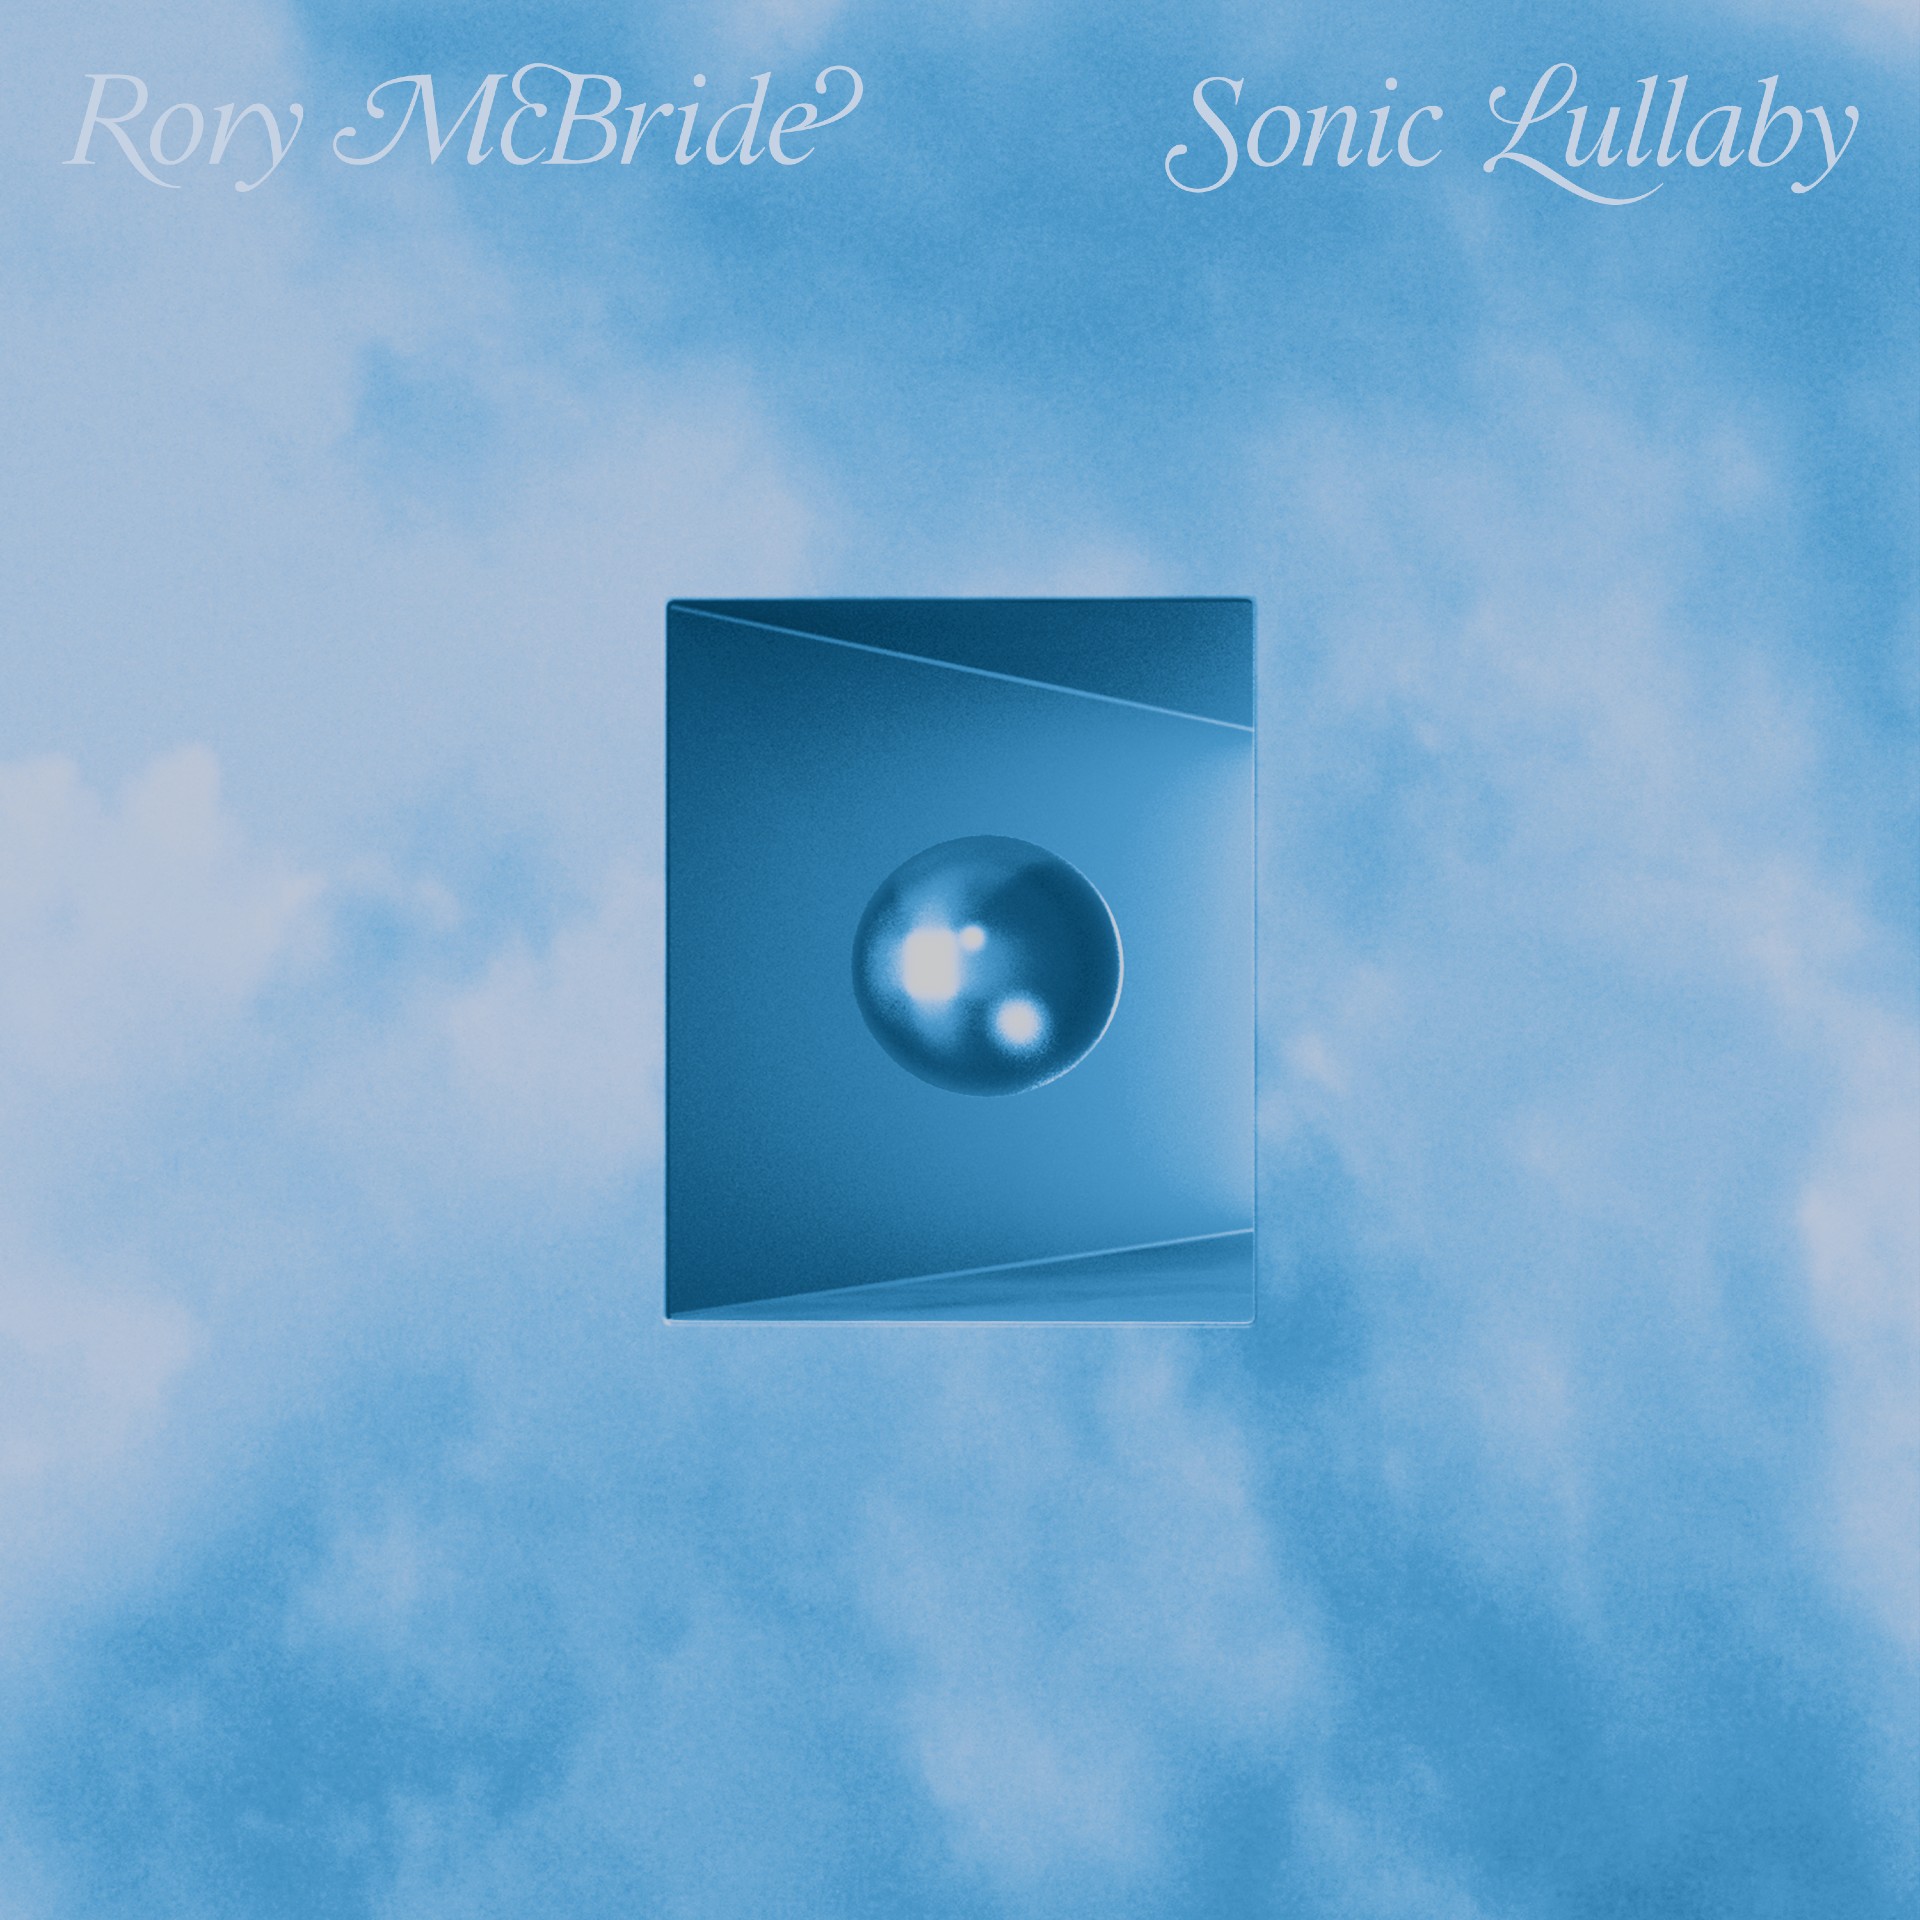 Rory McBride ‘Sonic Lullaby’ album artwork